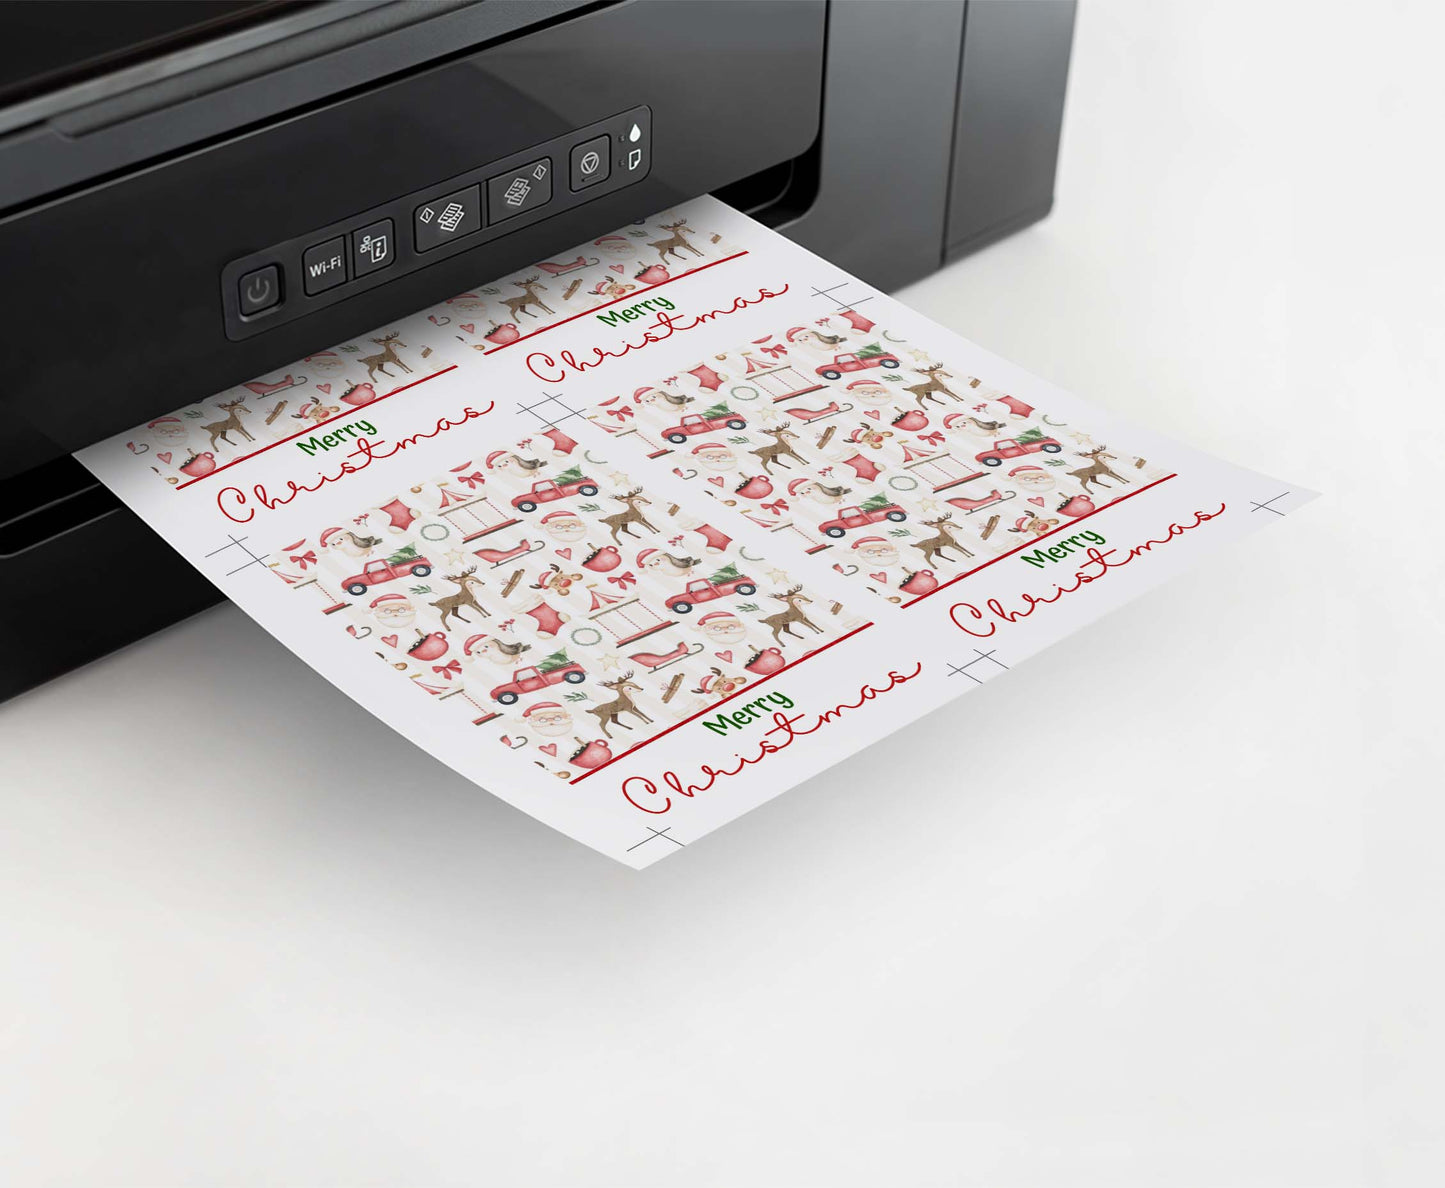 Merry Christmas cookie Card | Santa Printable Cards - 112